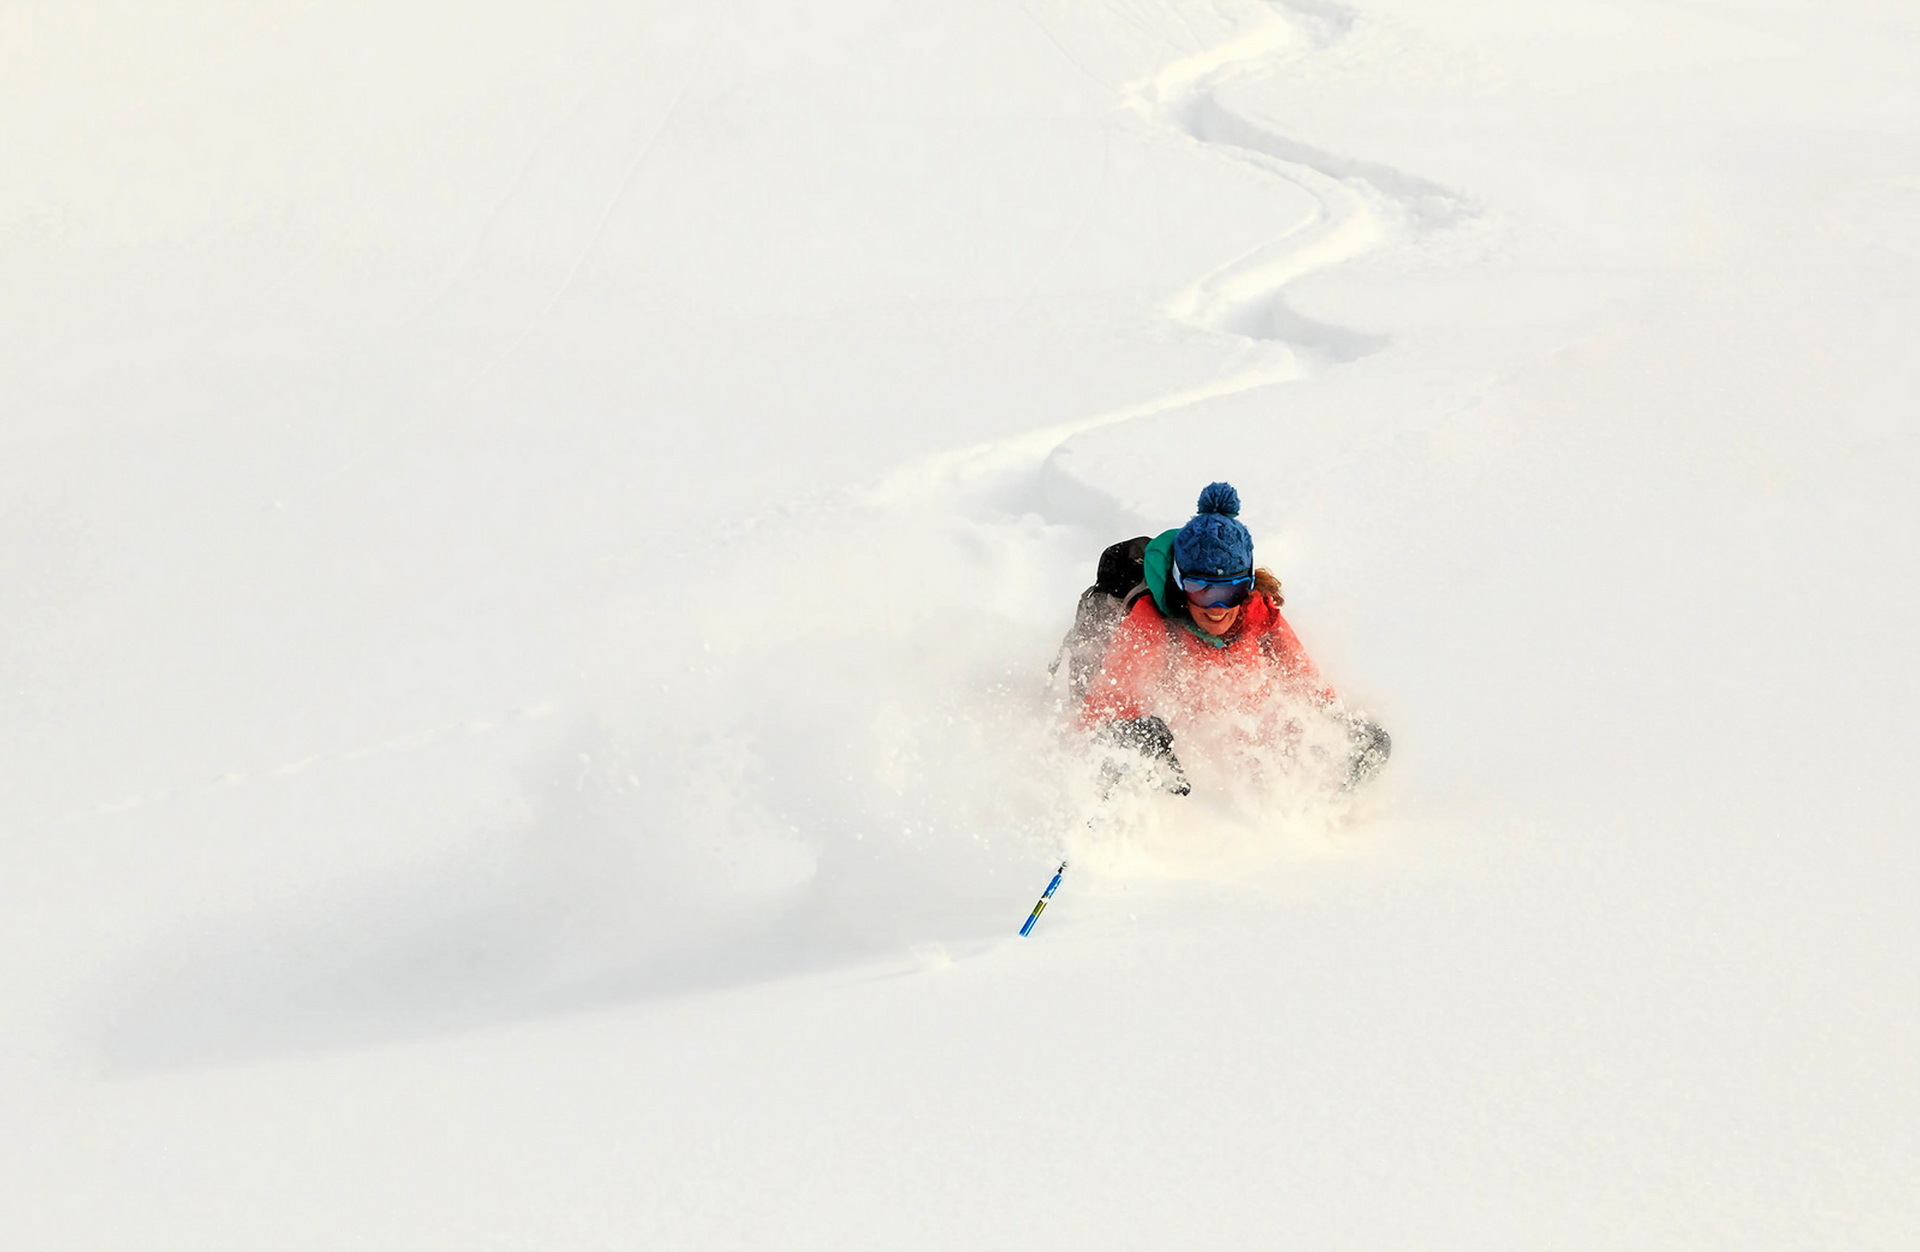 Descarga gratuita de fondo de pantalla para móvil de Nieve, Esquí, Deporte.